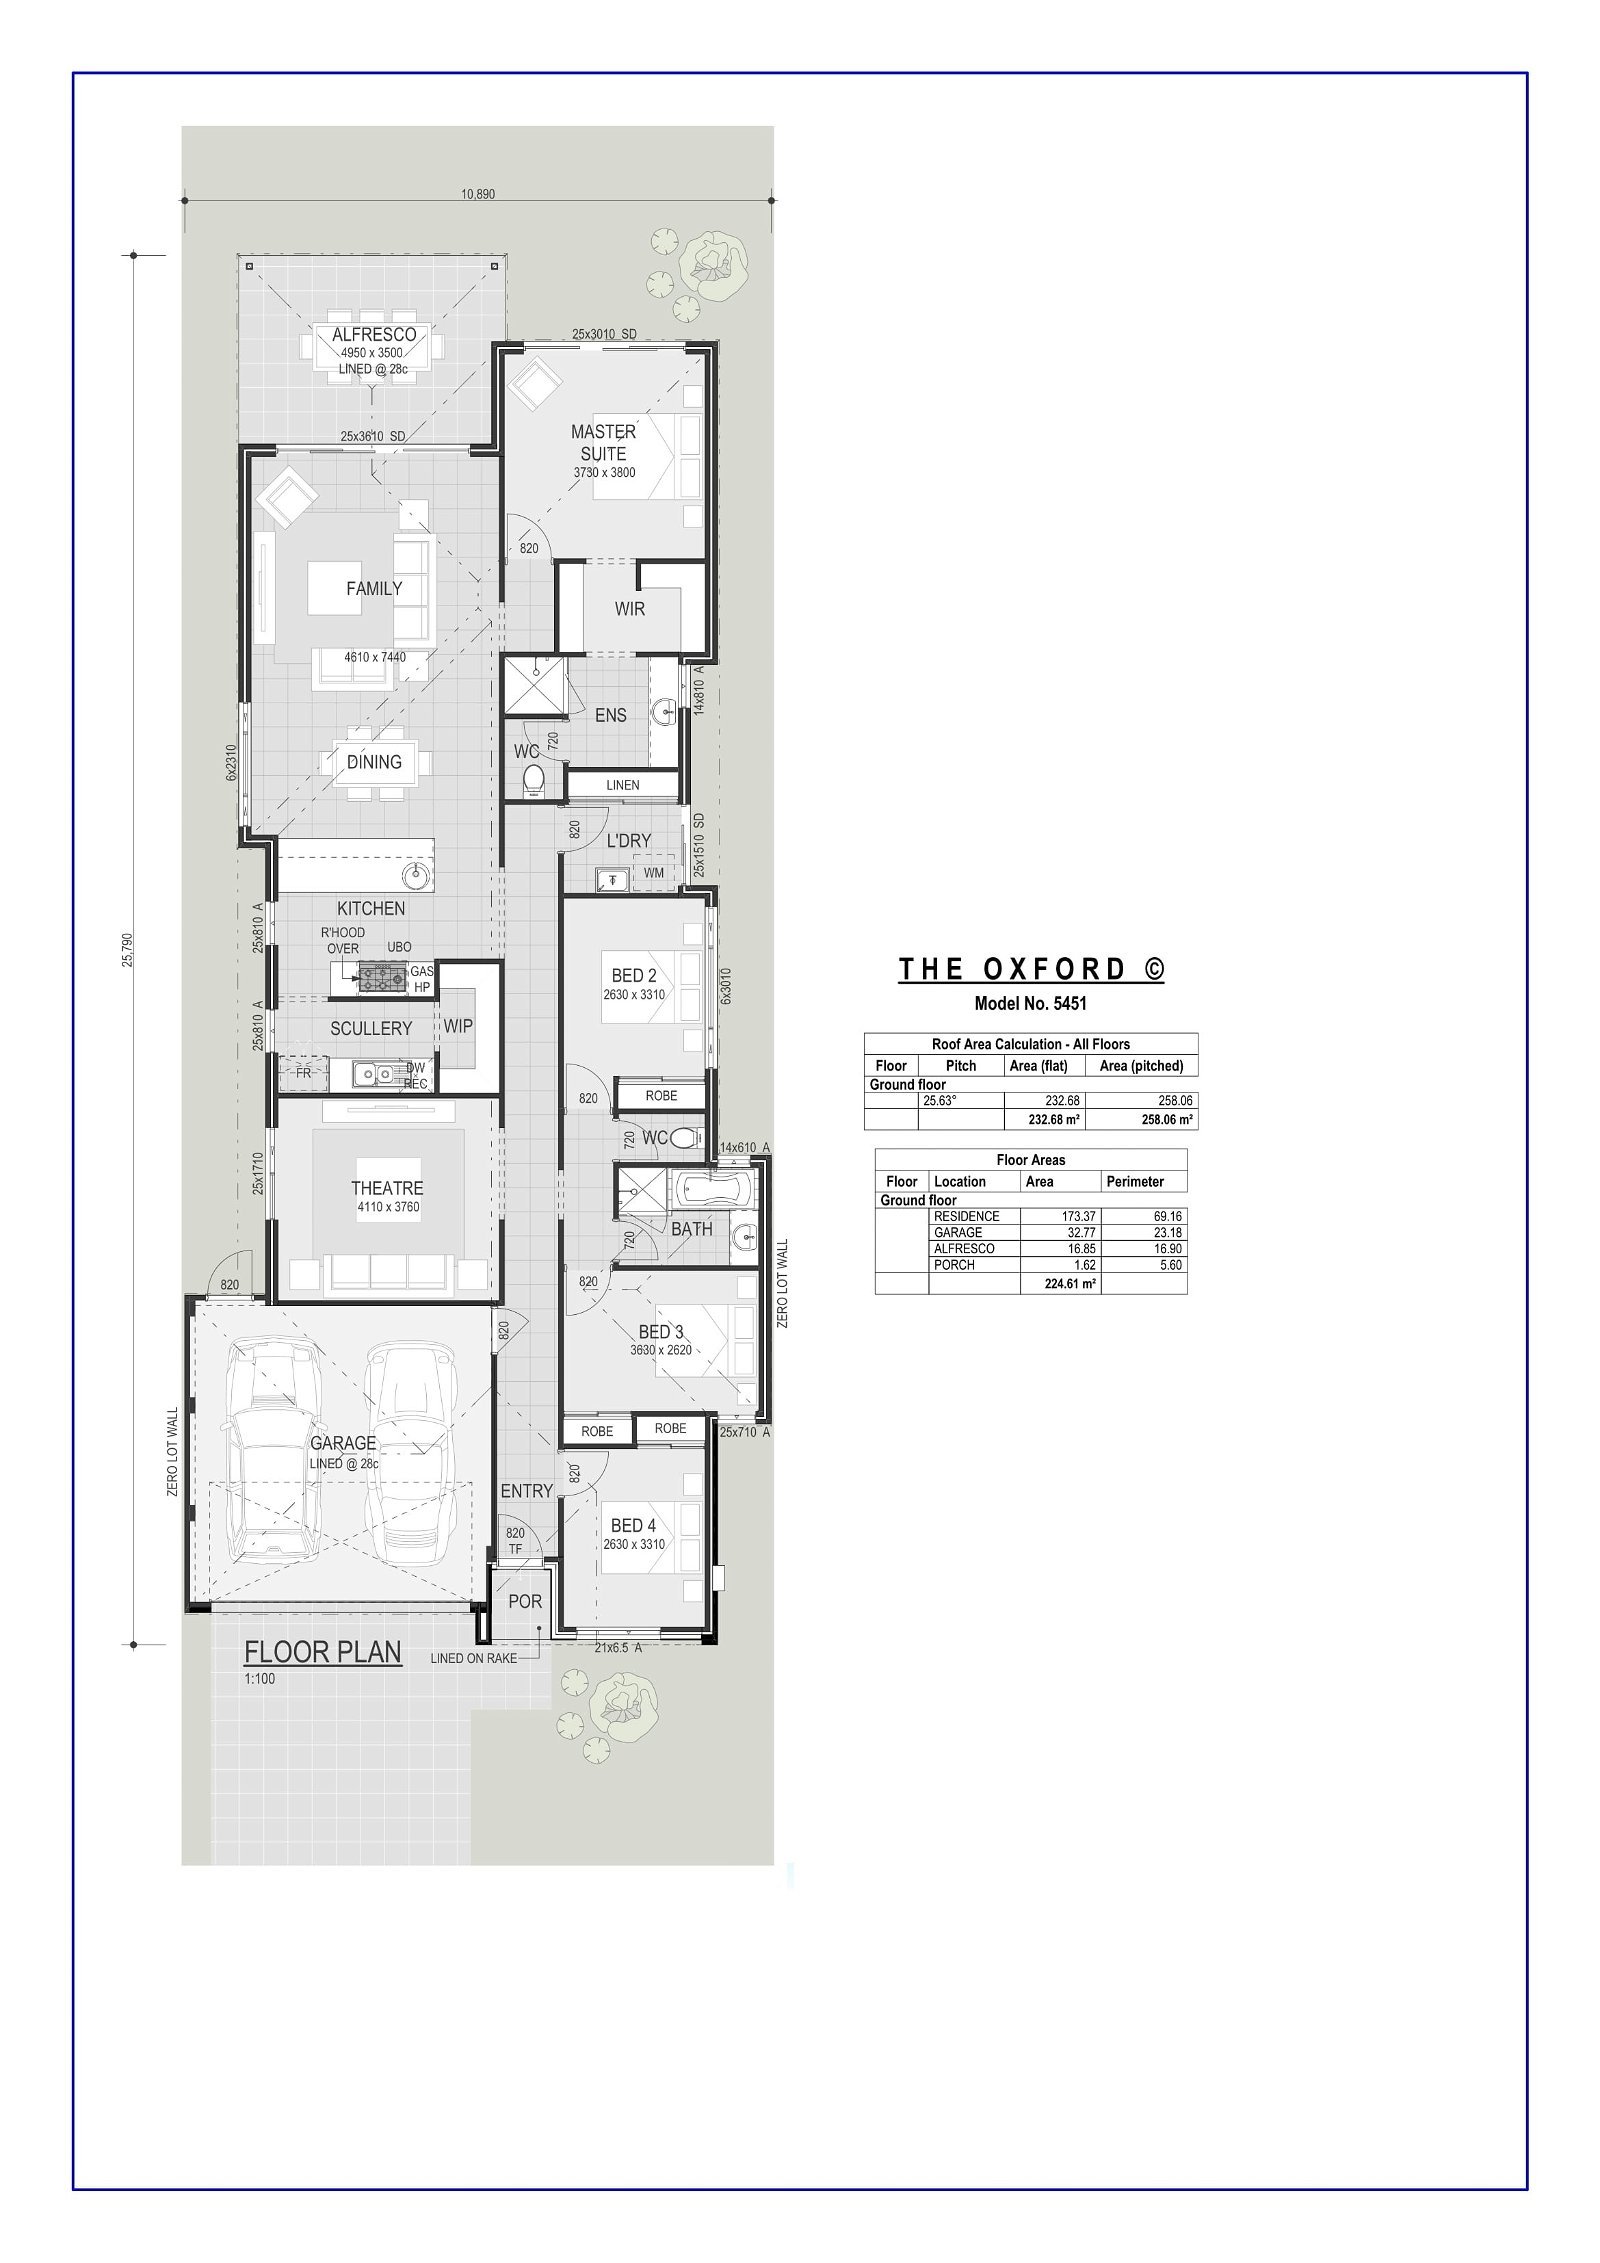 Residential Building Wa -  - Floorplan - The Oxford 1 Copy